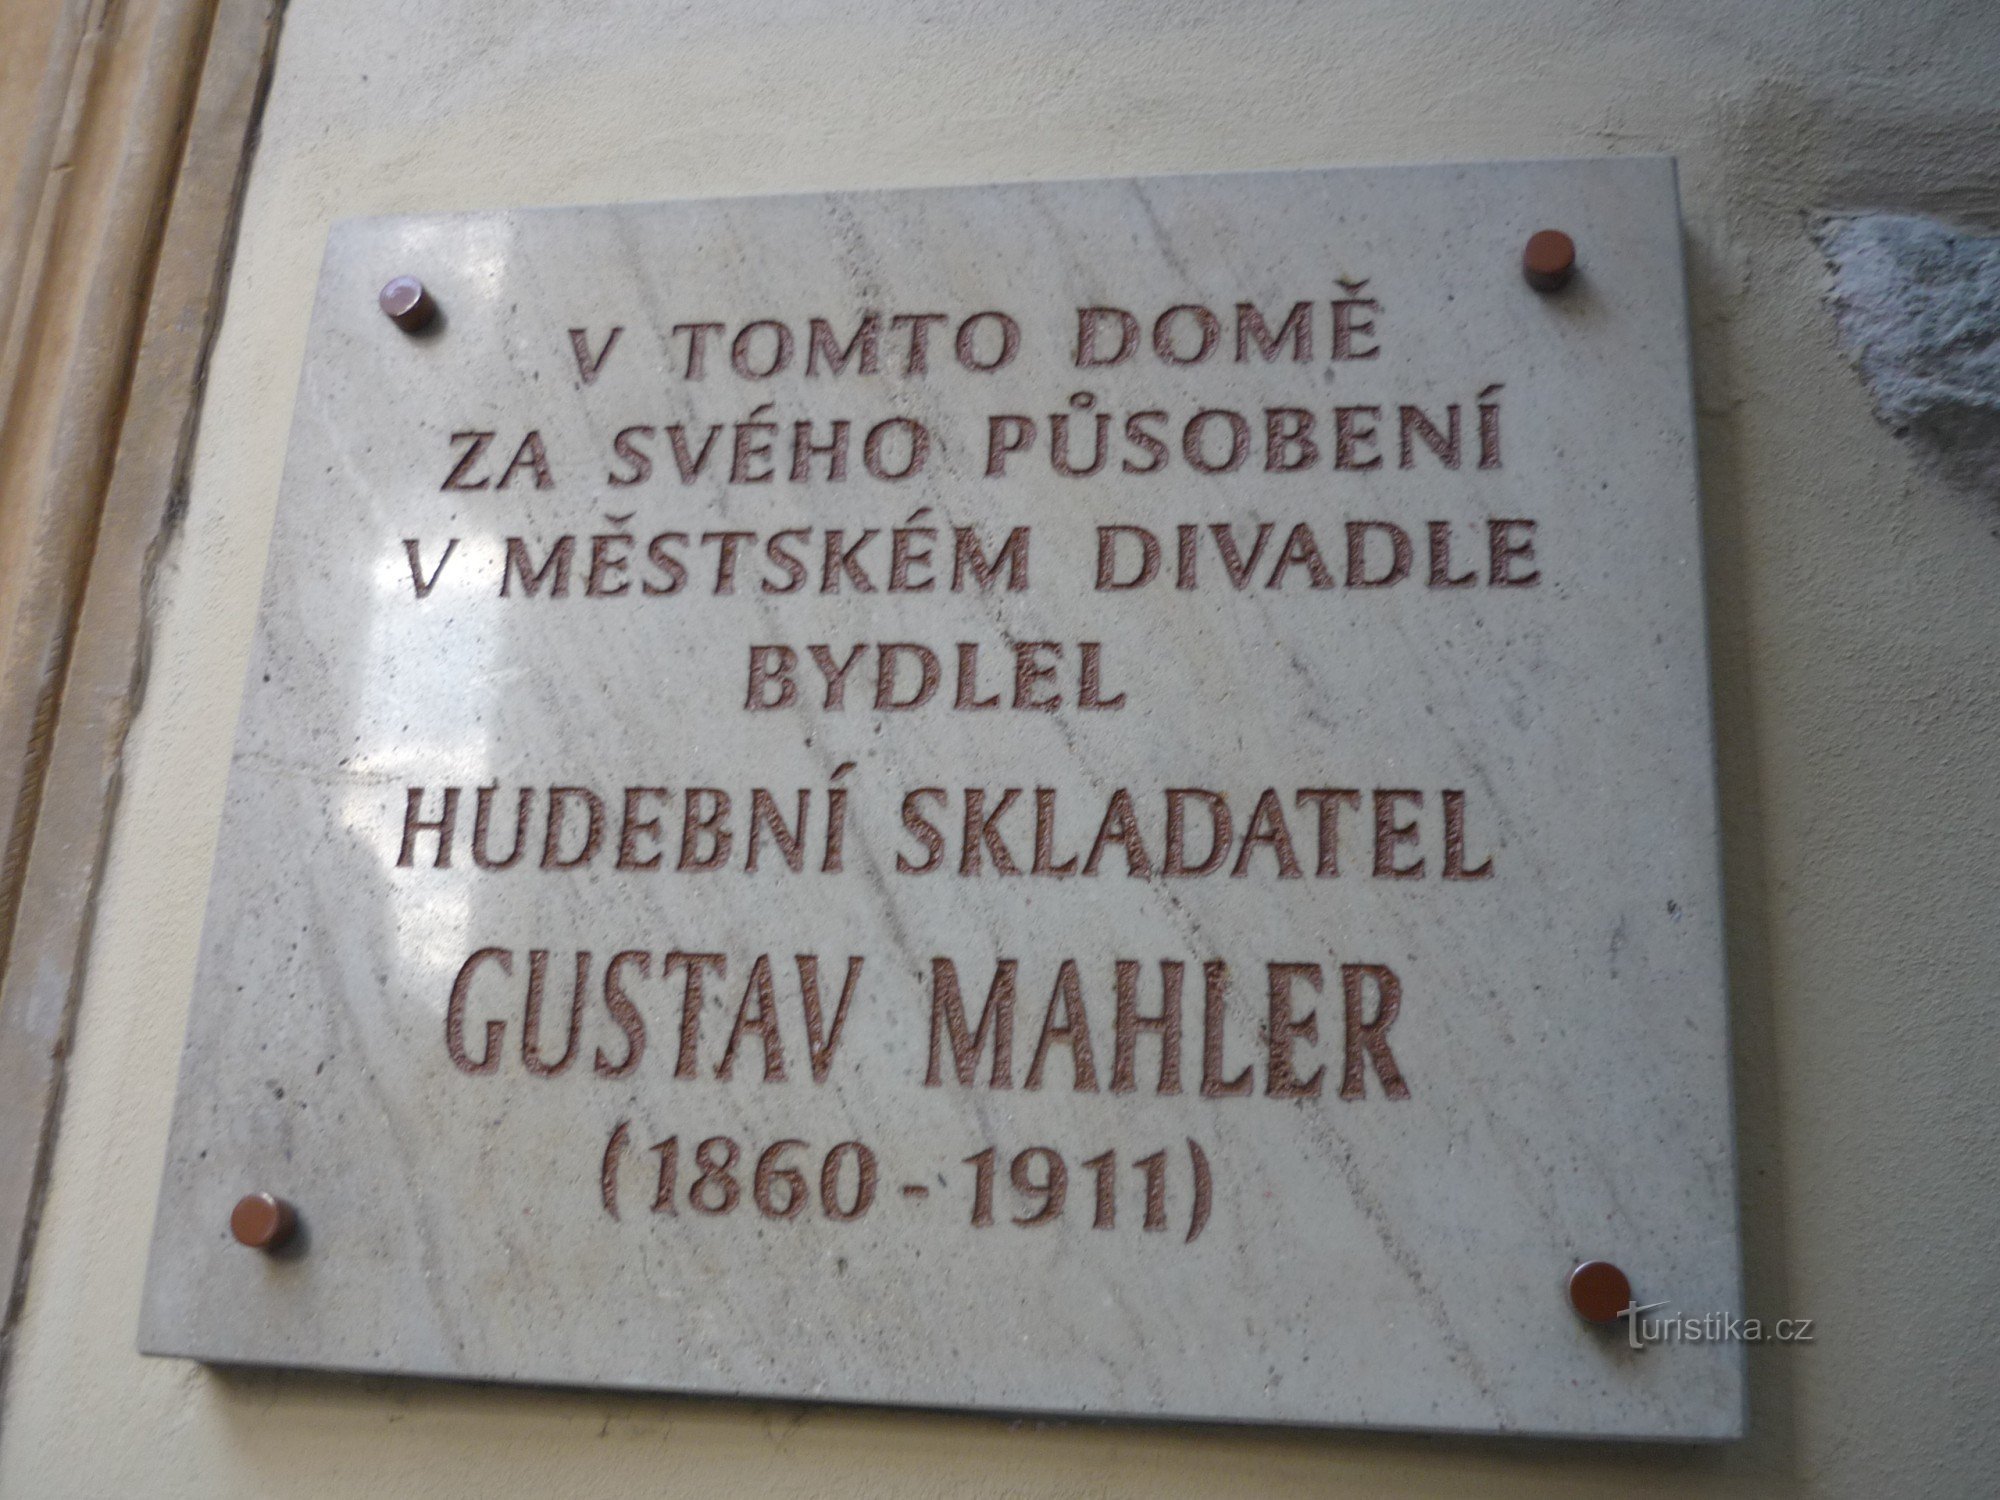 Gustaaf Mahler II